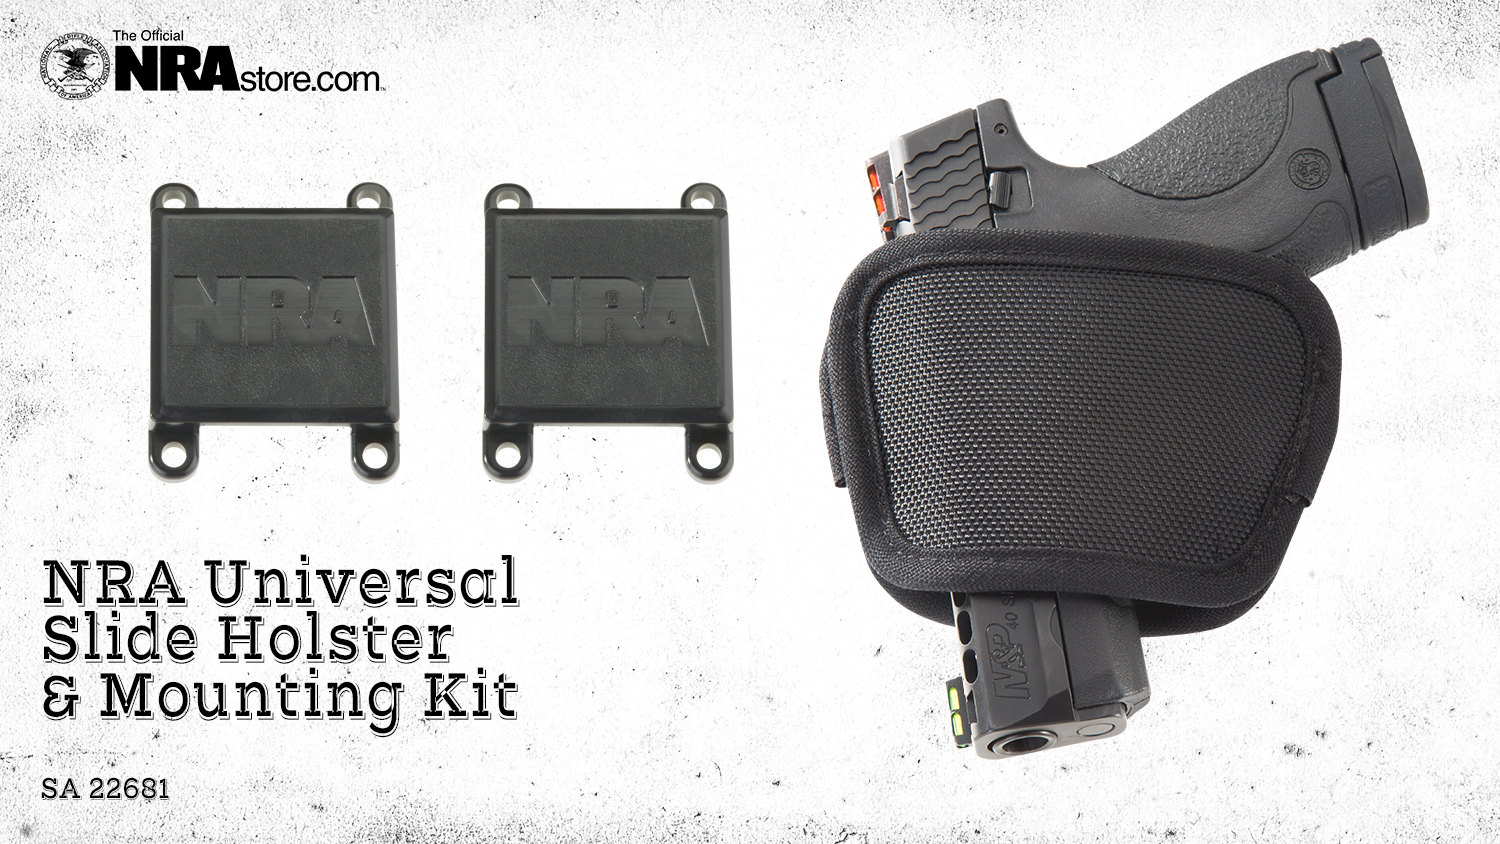 NRA Store Product Highlight: Universal Slide Holster & Mounting Kit